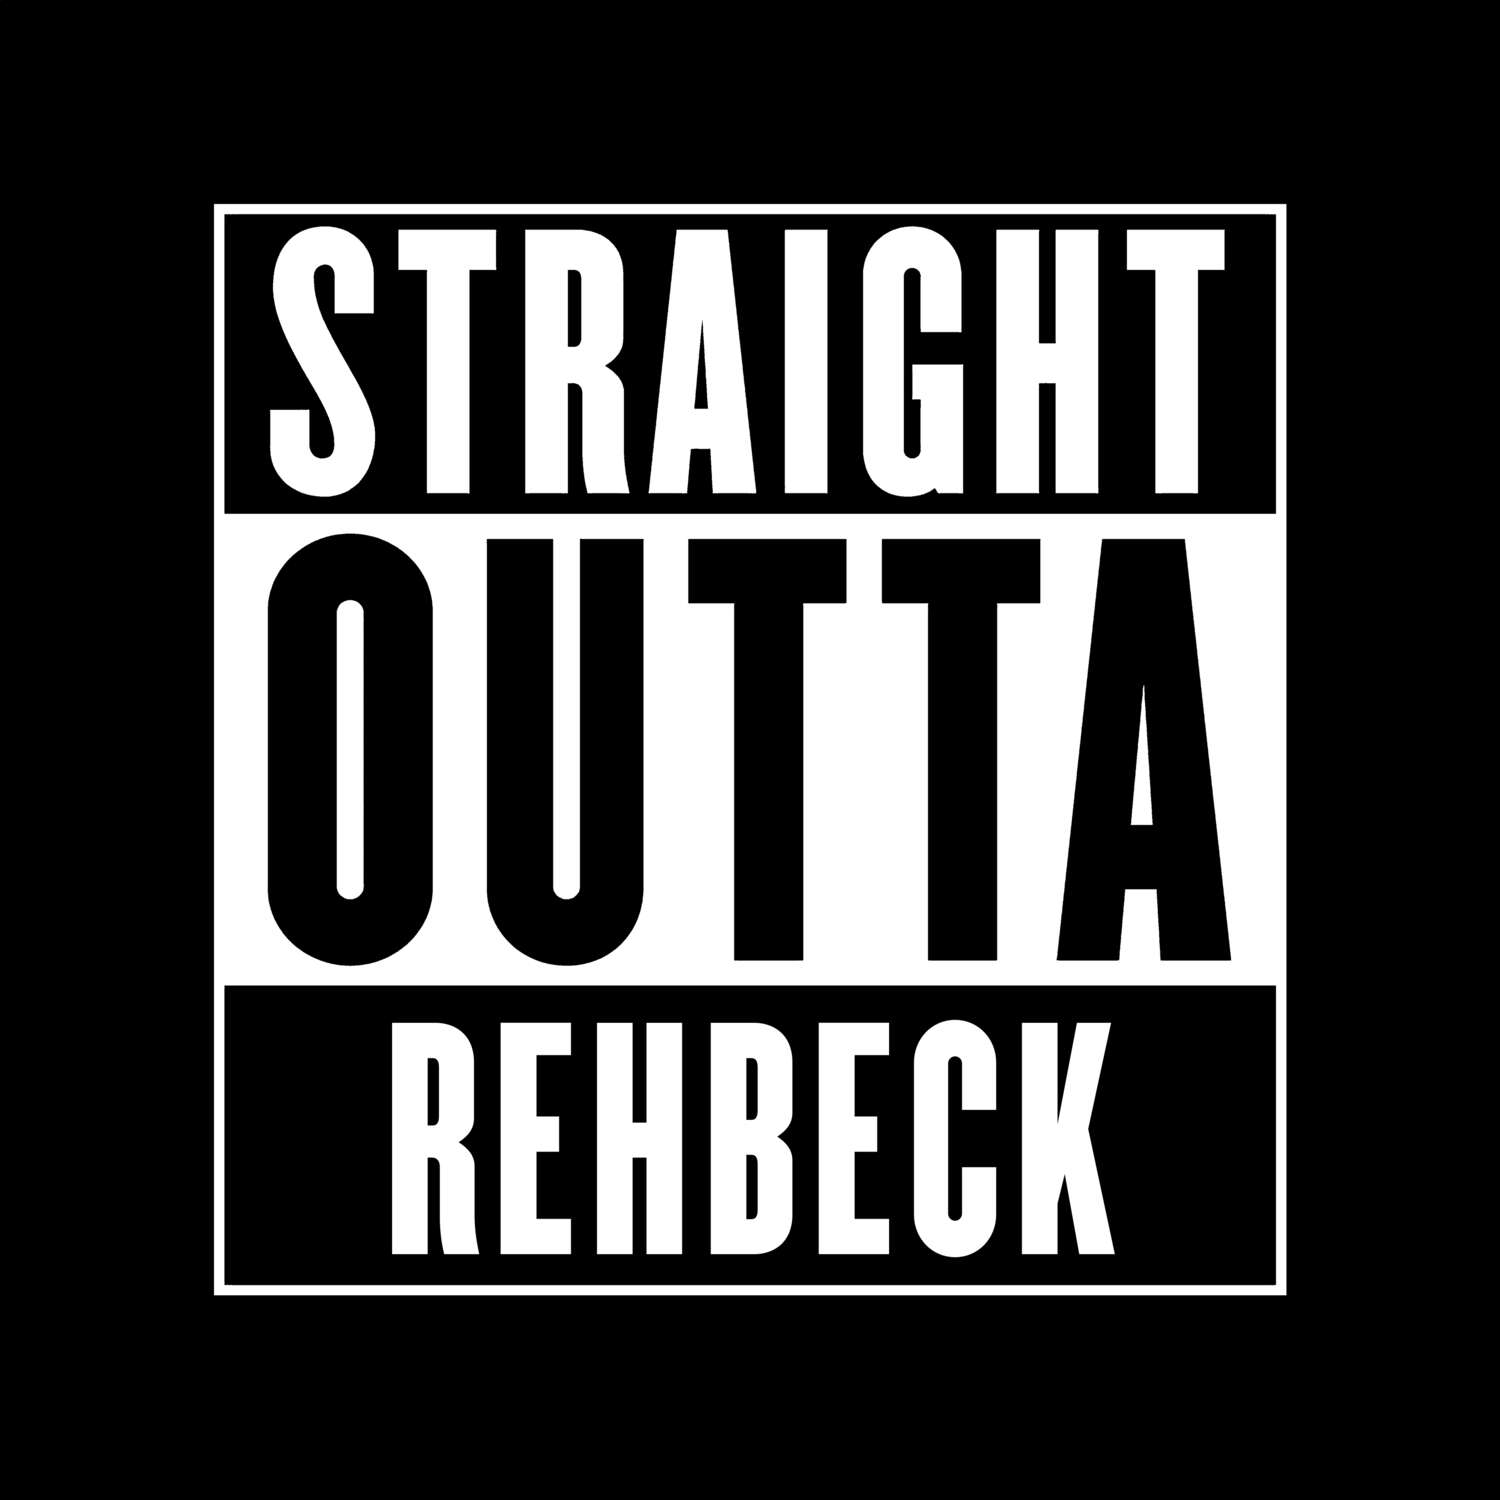 Rehbeck T-Shirt »Straight Outta«